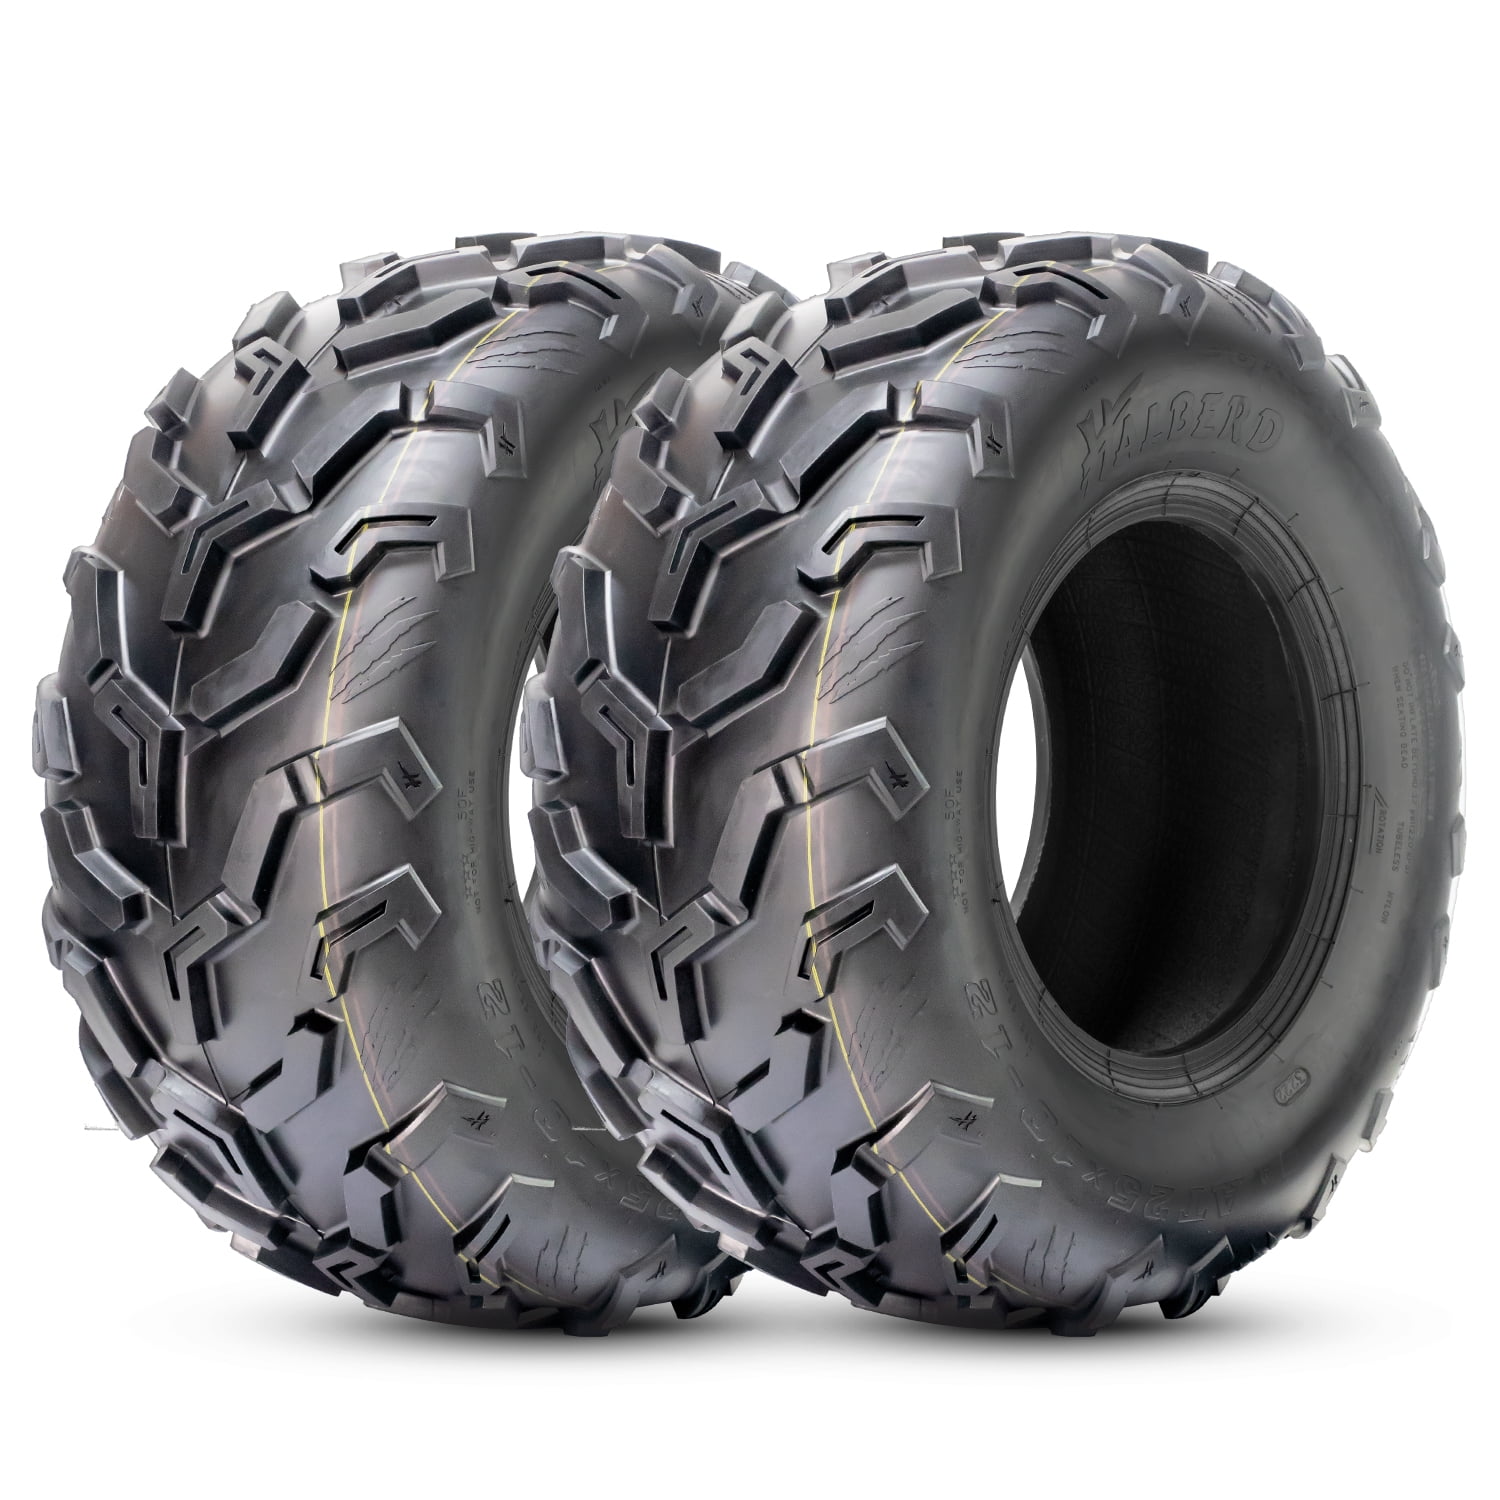 12-1/2 x 2.75 Dirt Bike Tire and Tube Set for Razor MX350 & MX400